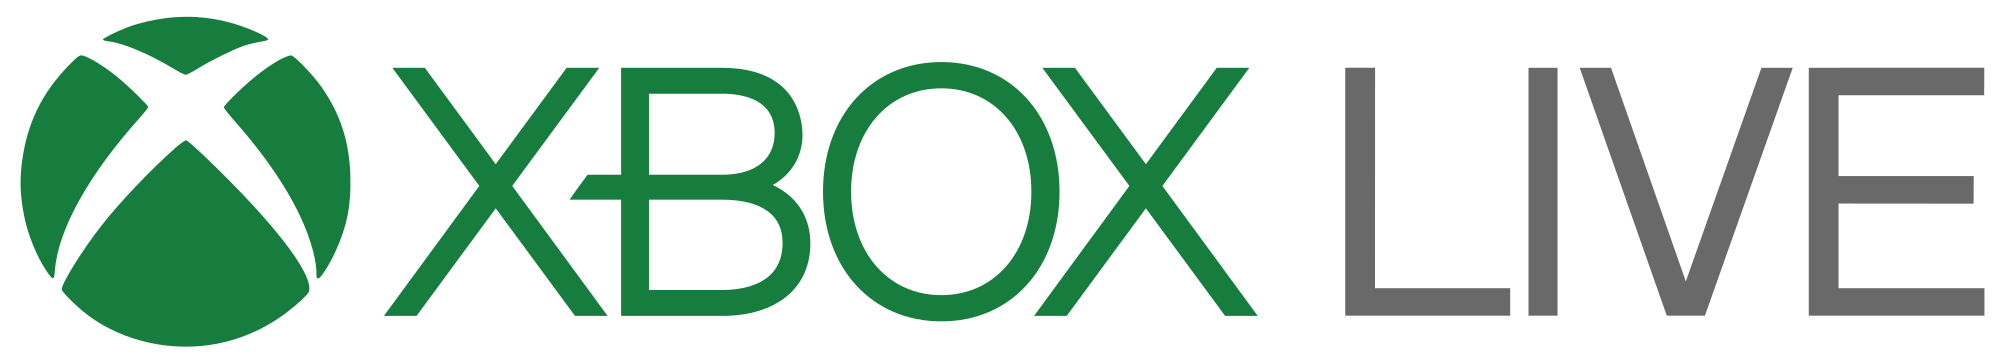 Xbox Live Logo - XBox Live logo.svg